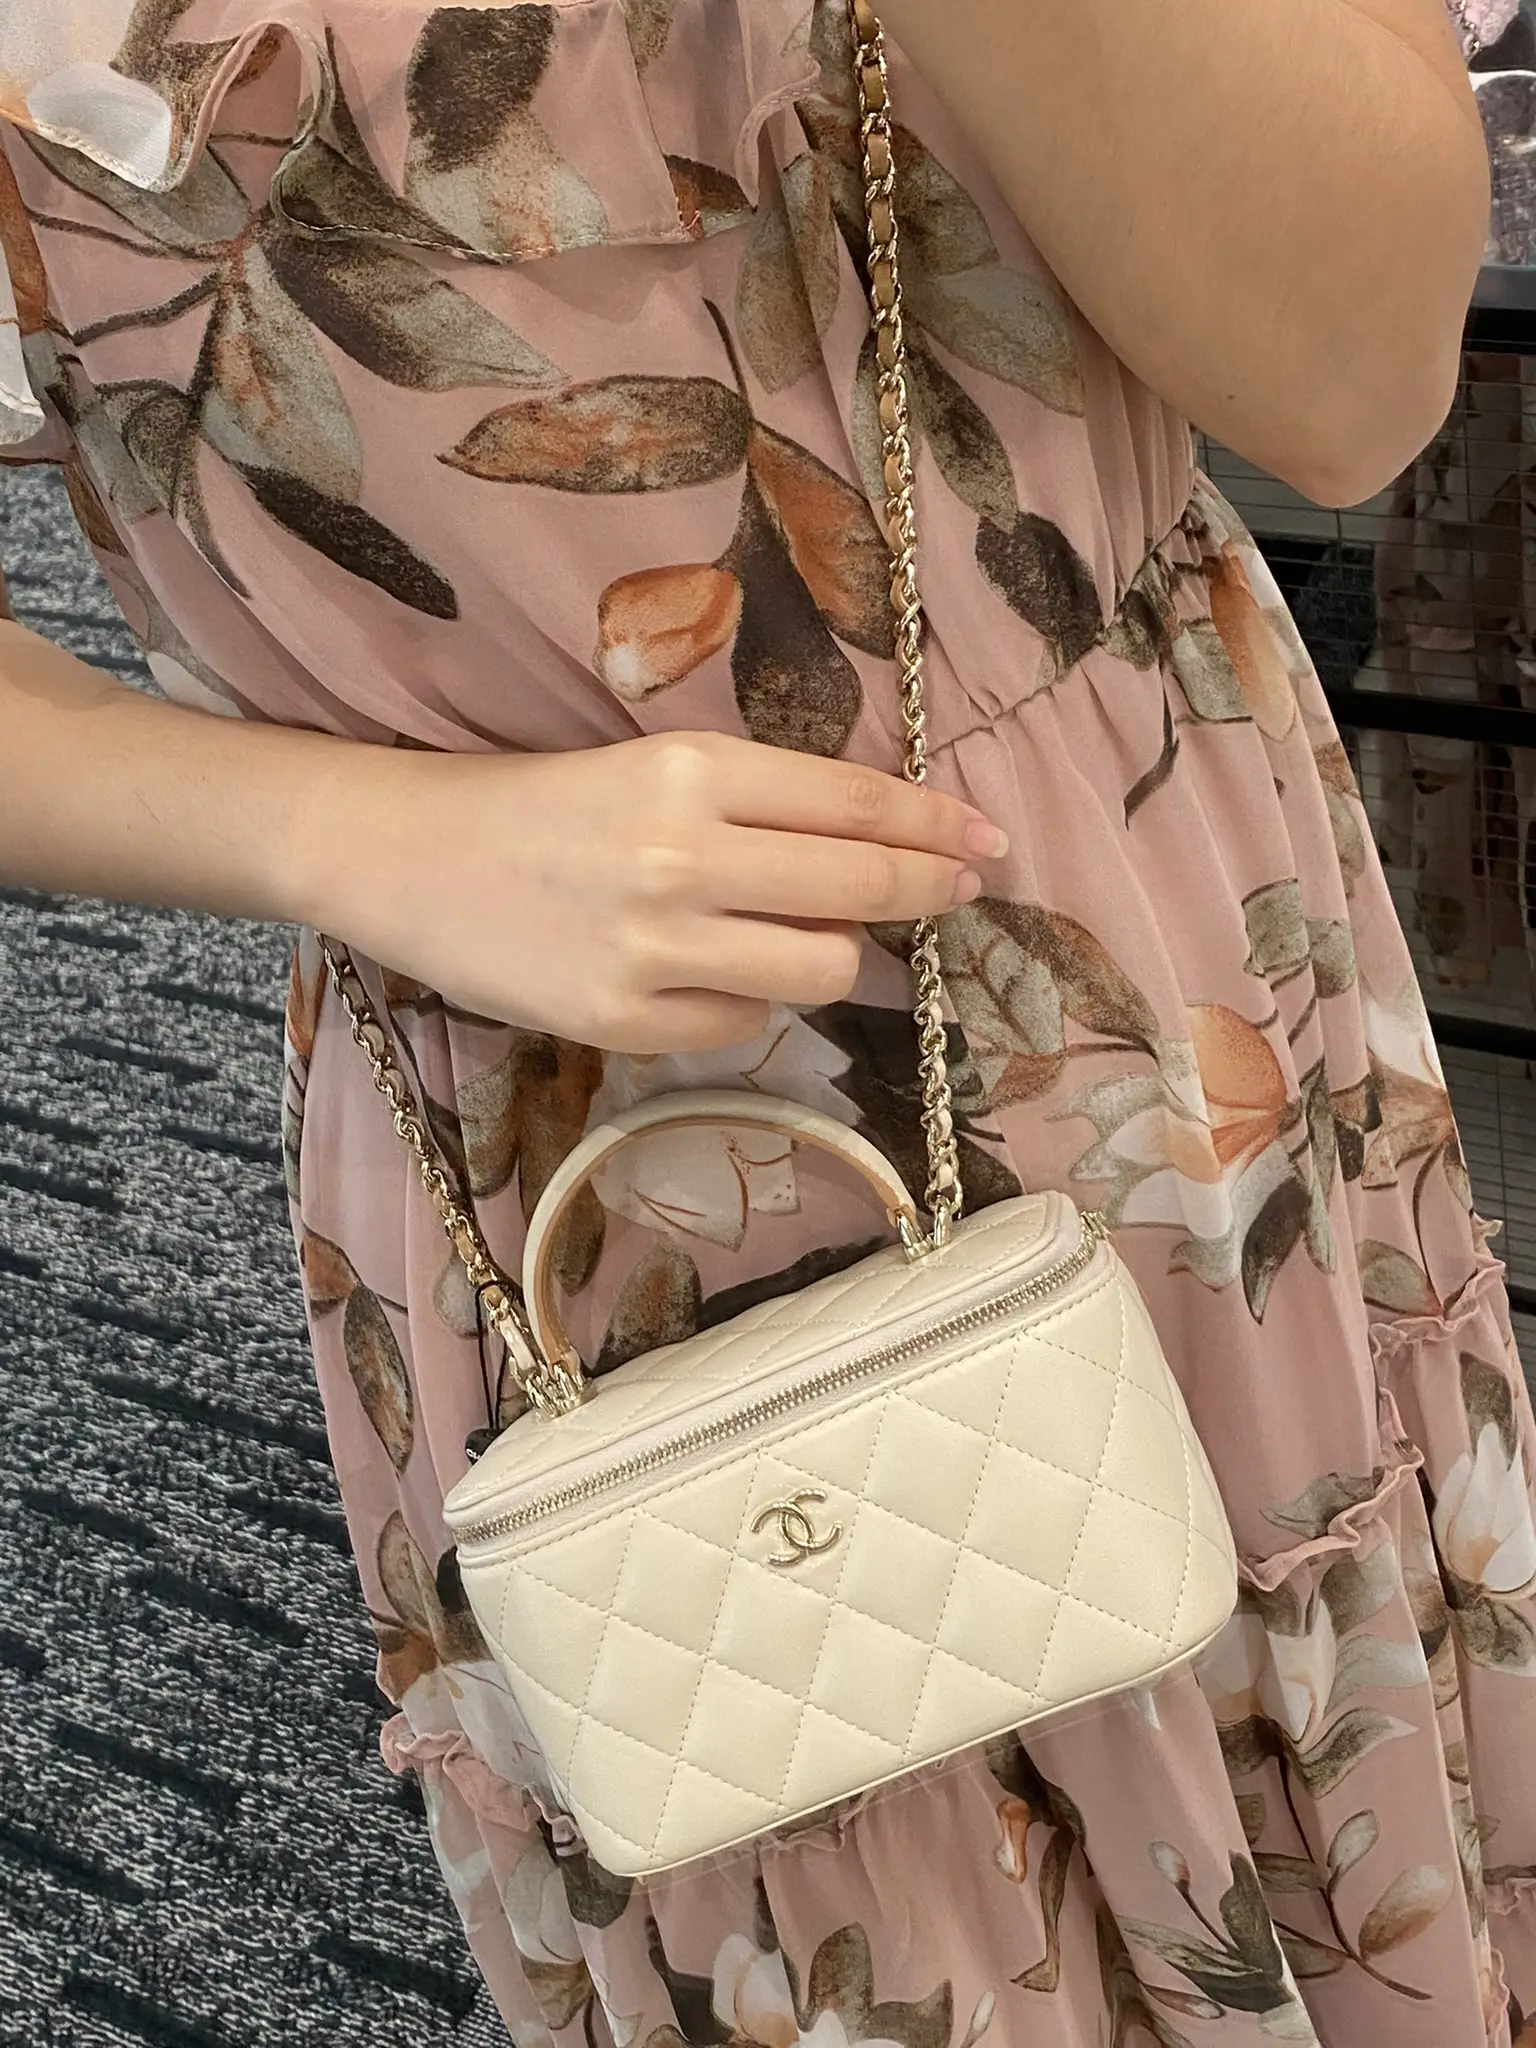 coco chanel pink purse